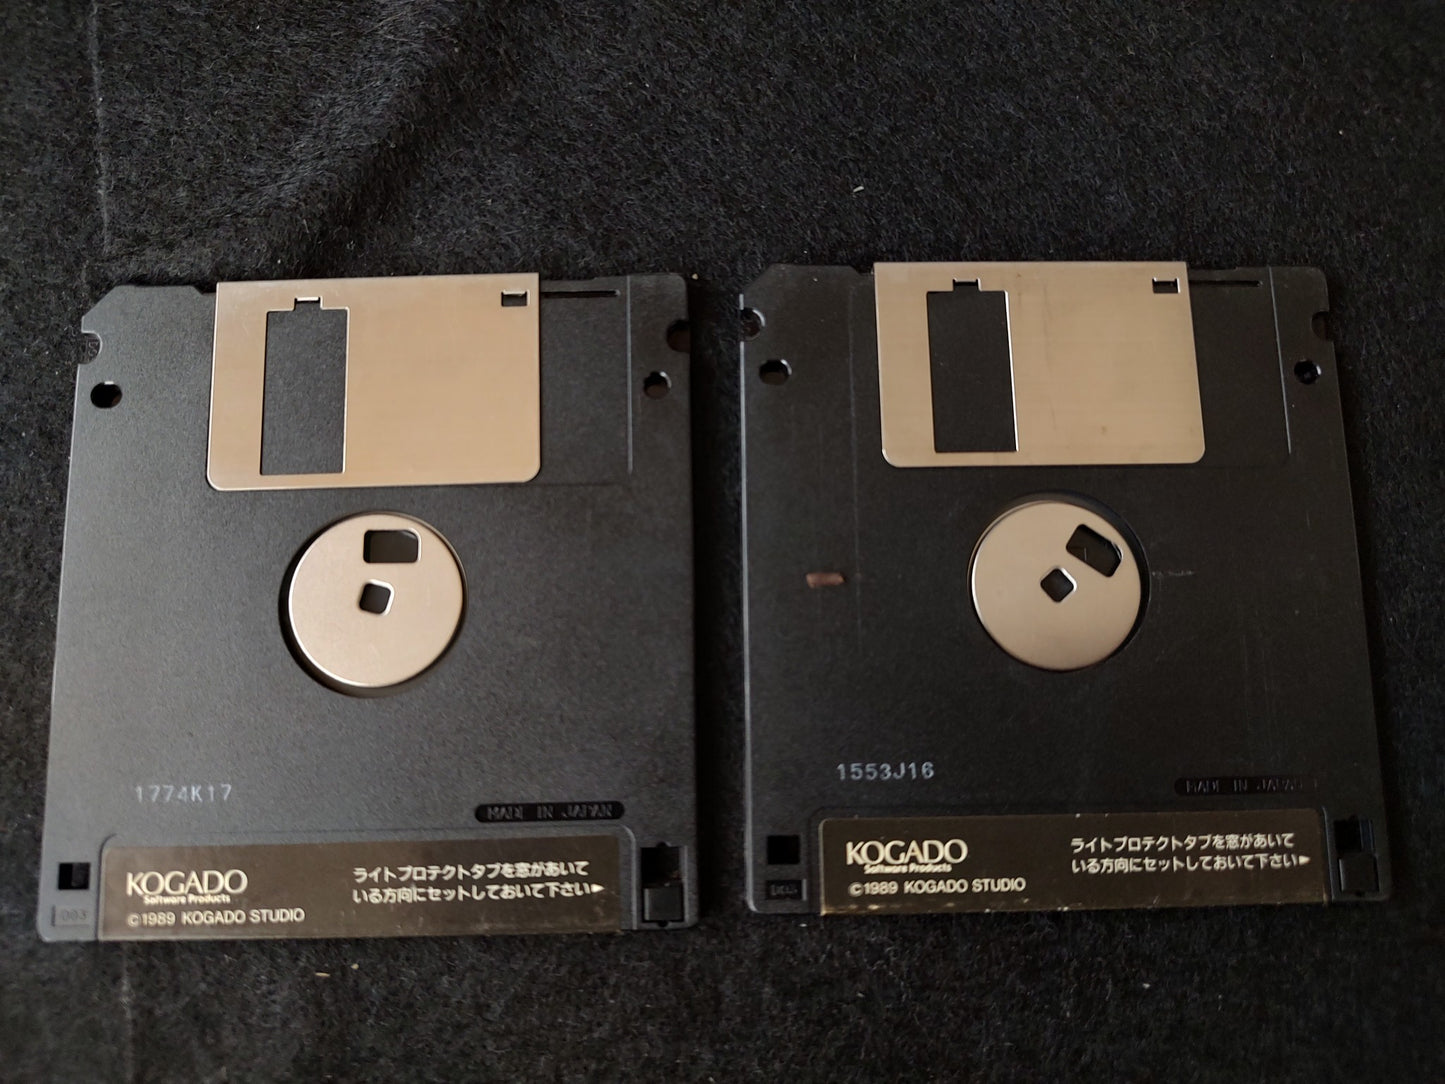 PC-9801 PC98 La Valeur Game Floppy disks, w/Manual, Box set,Not tested-f0626